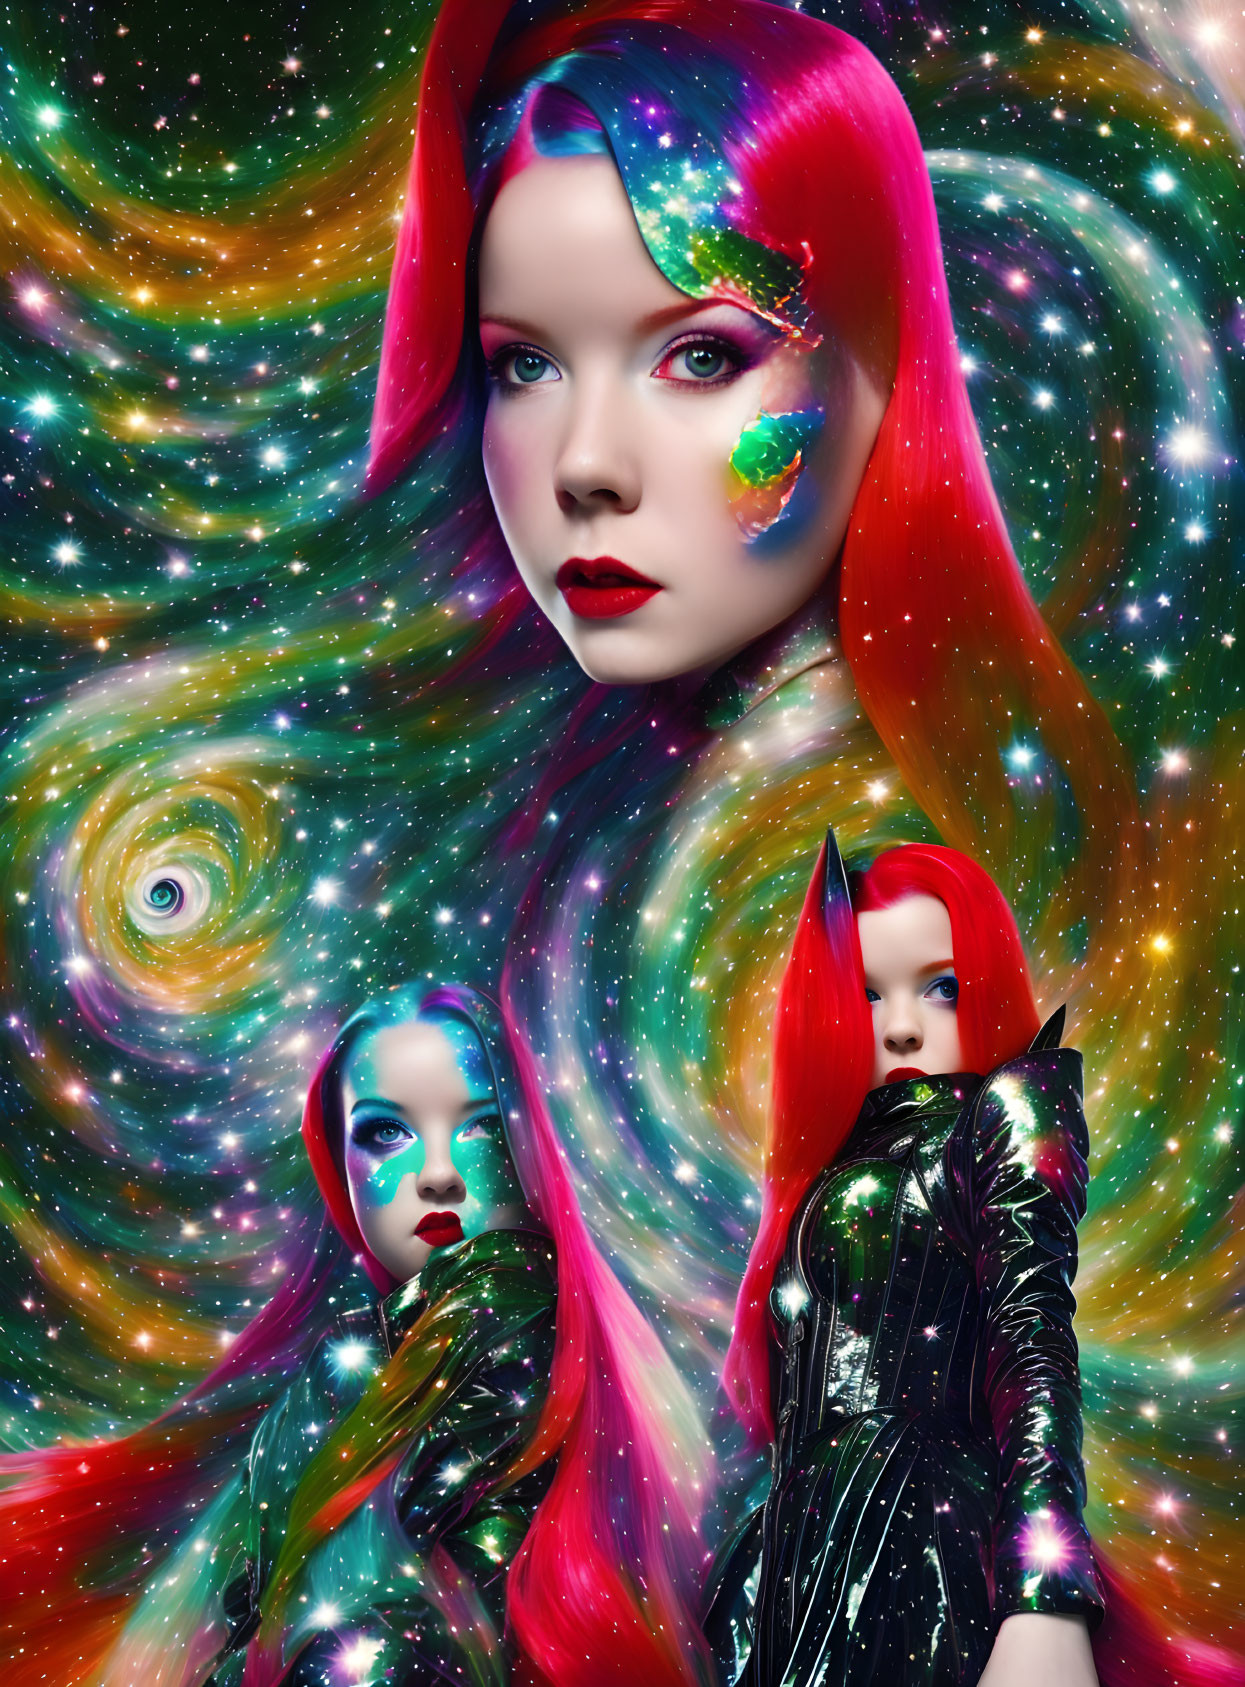 Digital Artwork: Three Figures in Cosmic Makeup against Galaxy Backdrop